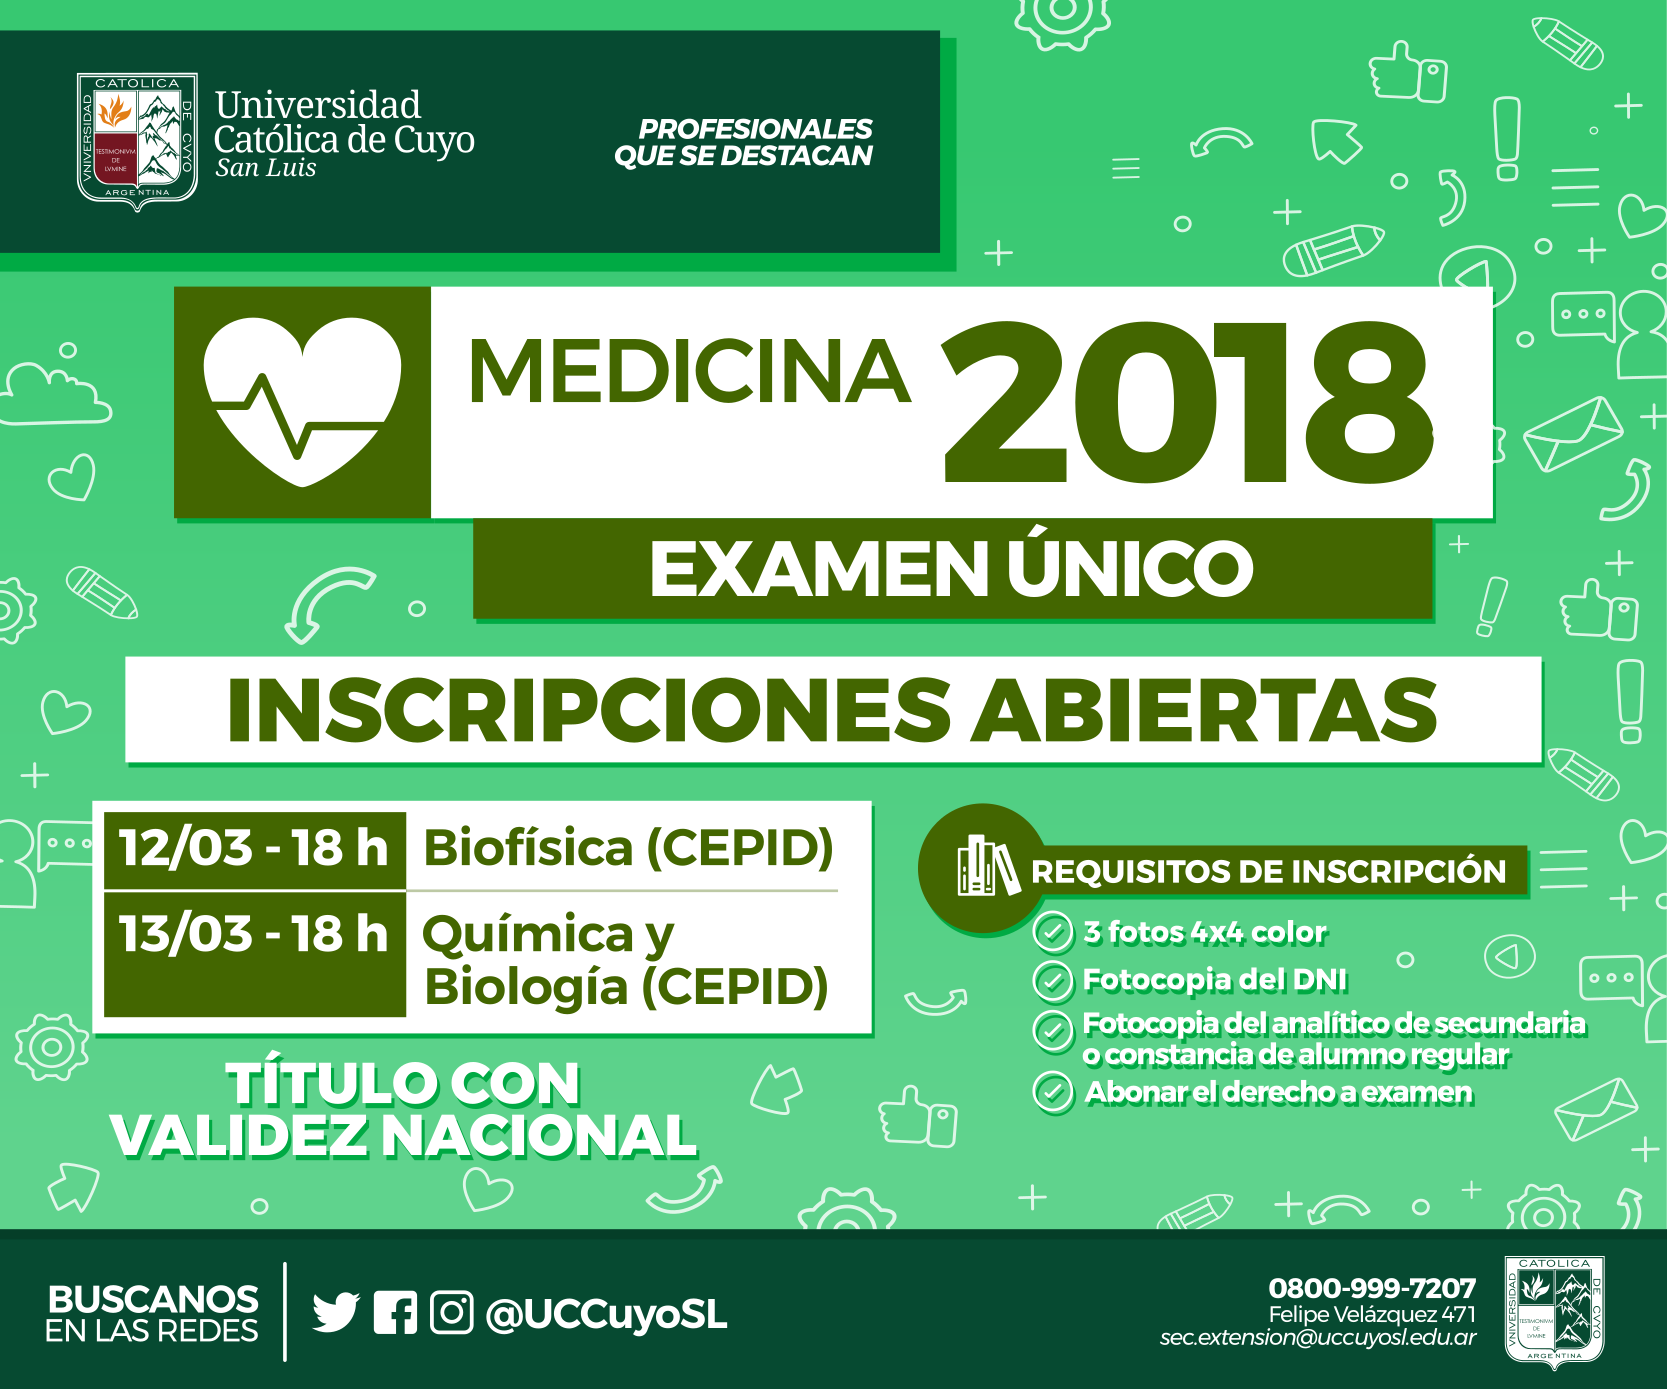 Examen unico medicina 2018